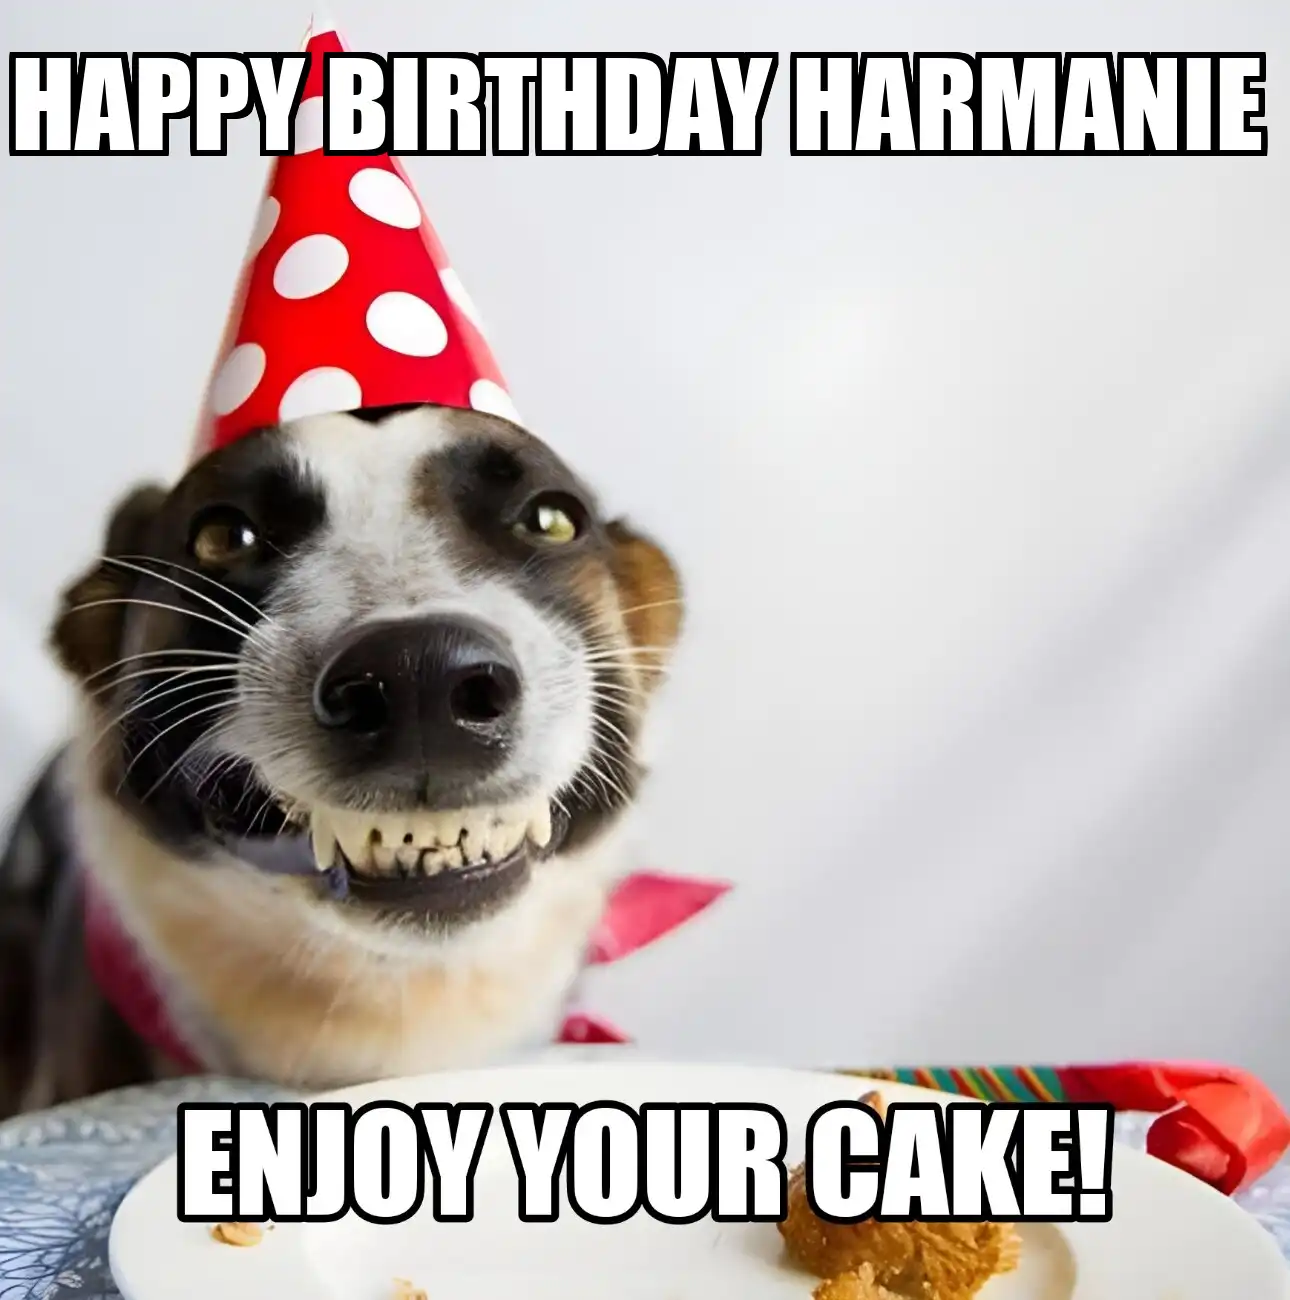 Happy Birthday Harmanie Enjoy Your Cake Dog Meme